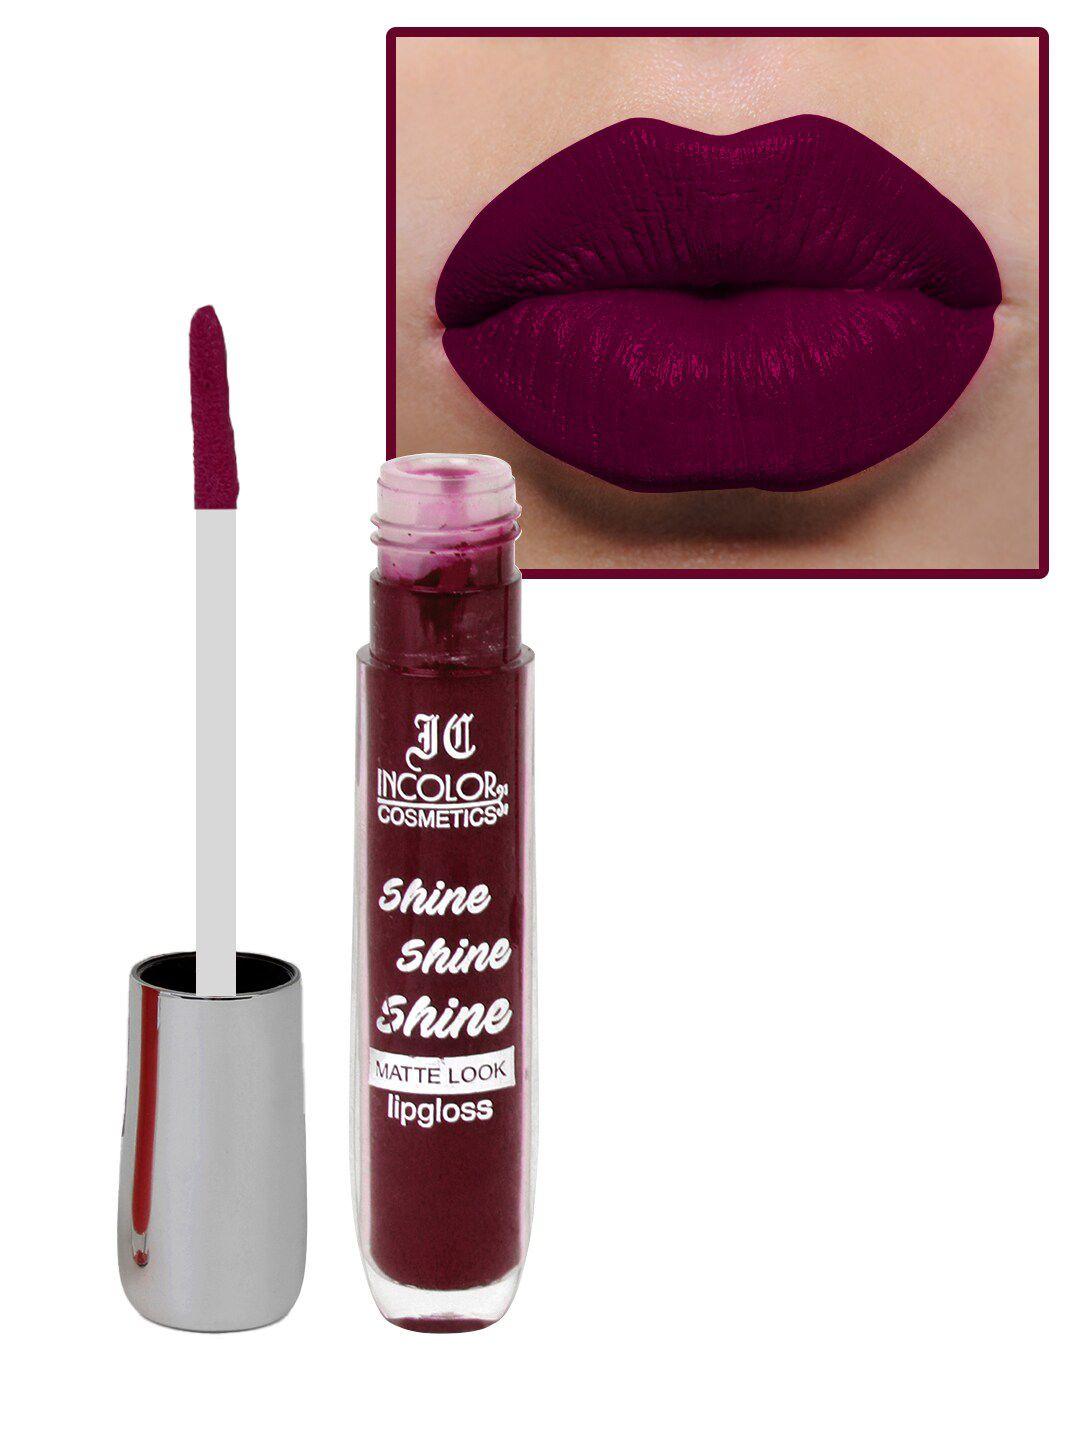 incolor shine shine shine long-wearing lightweight matte look lip gloss 8ml - shade 03